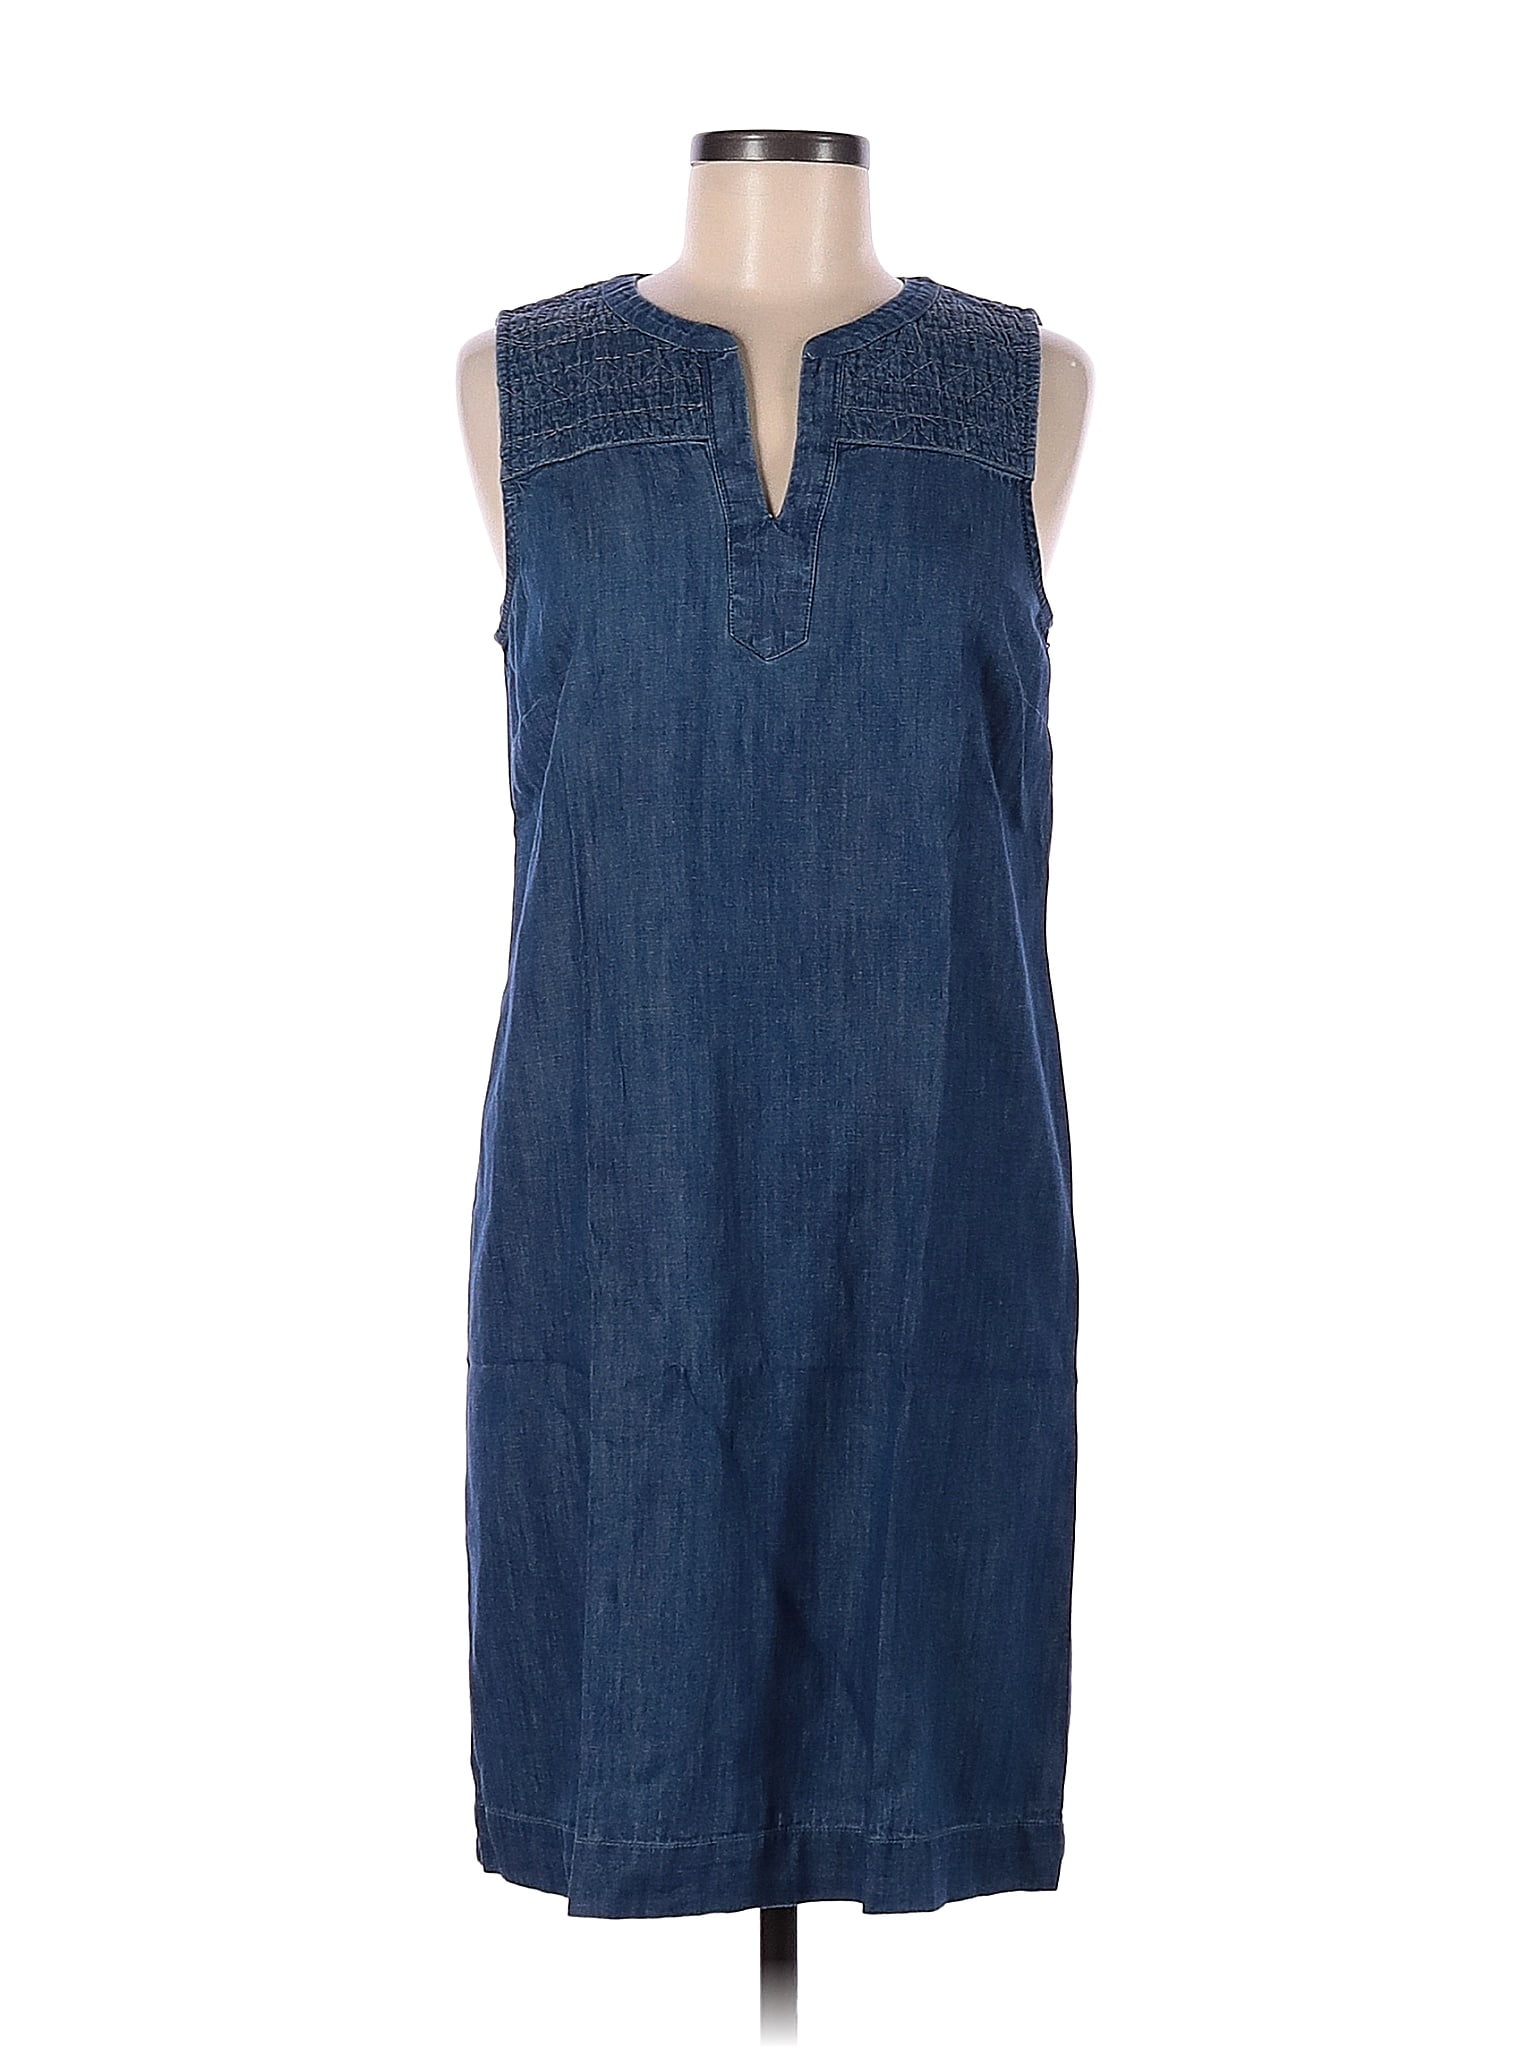 Talbots 100% Cotton Blue Casual Dress Size 8 (Petite) - 79% off | thredUP